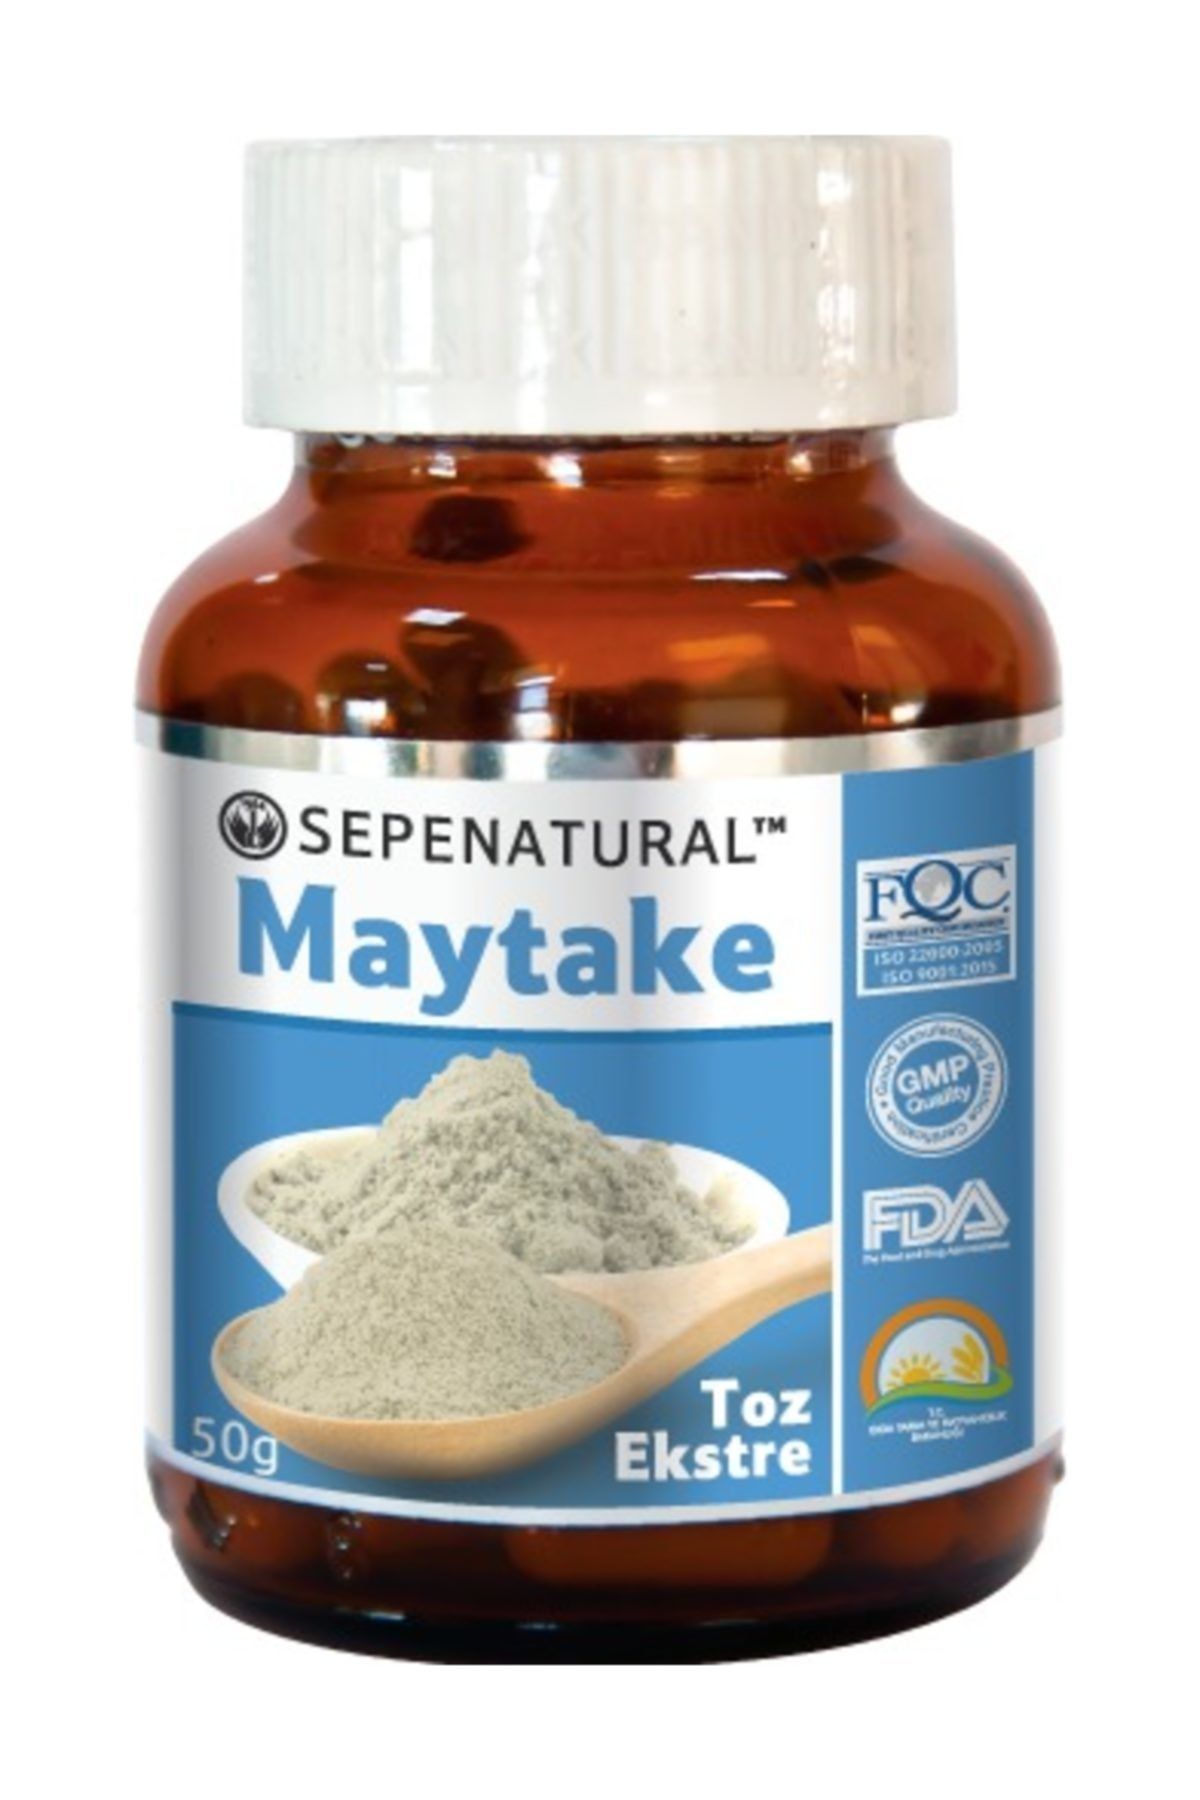 Sepe Natural Maytake Mantar Ekstresi Toz Ekstrakt  Maitake Extract 50 gr.